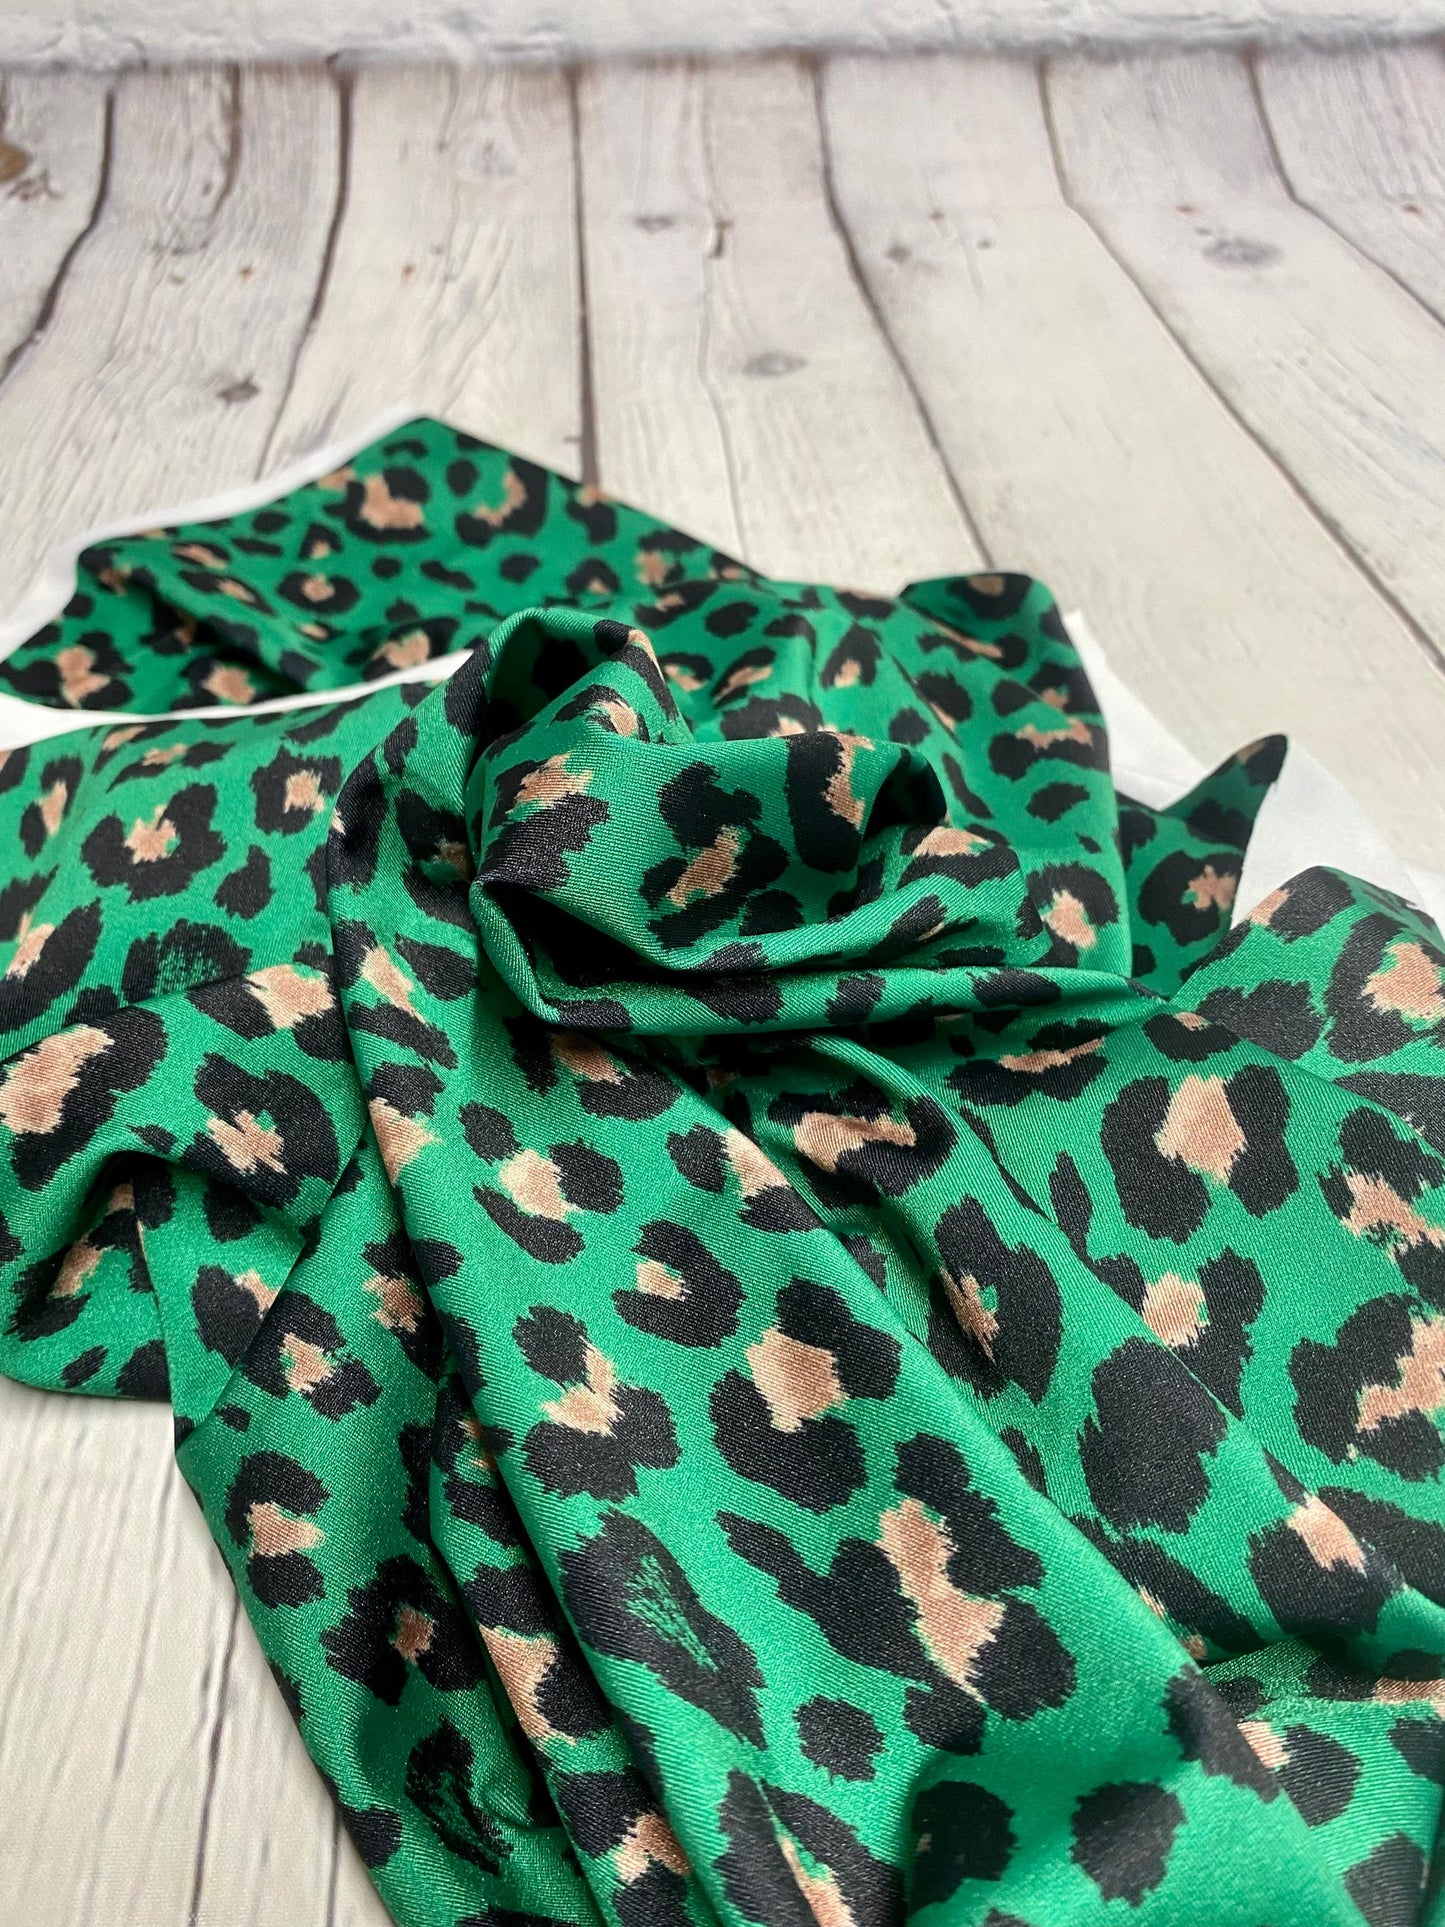 4 Way Stretch Print Nylon Spandex Fabric By The Yard Tricot Swim Wear Bikini Active Wear Green Animal Cheetah Leopard Print 280 GSM